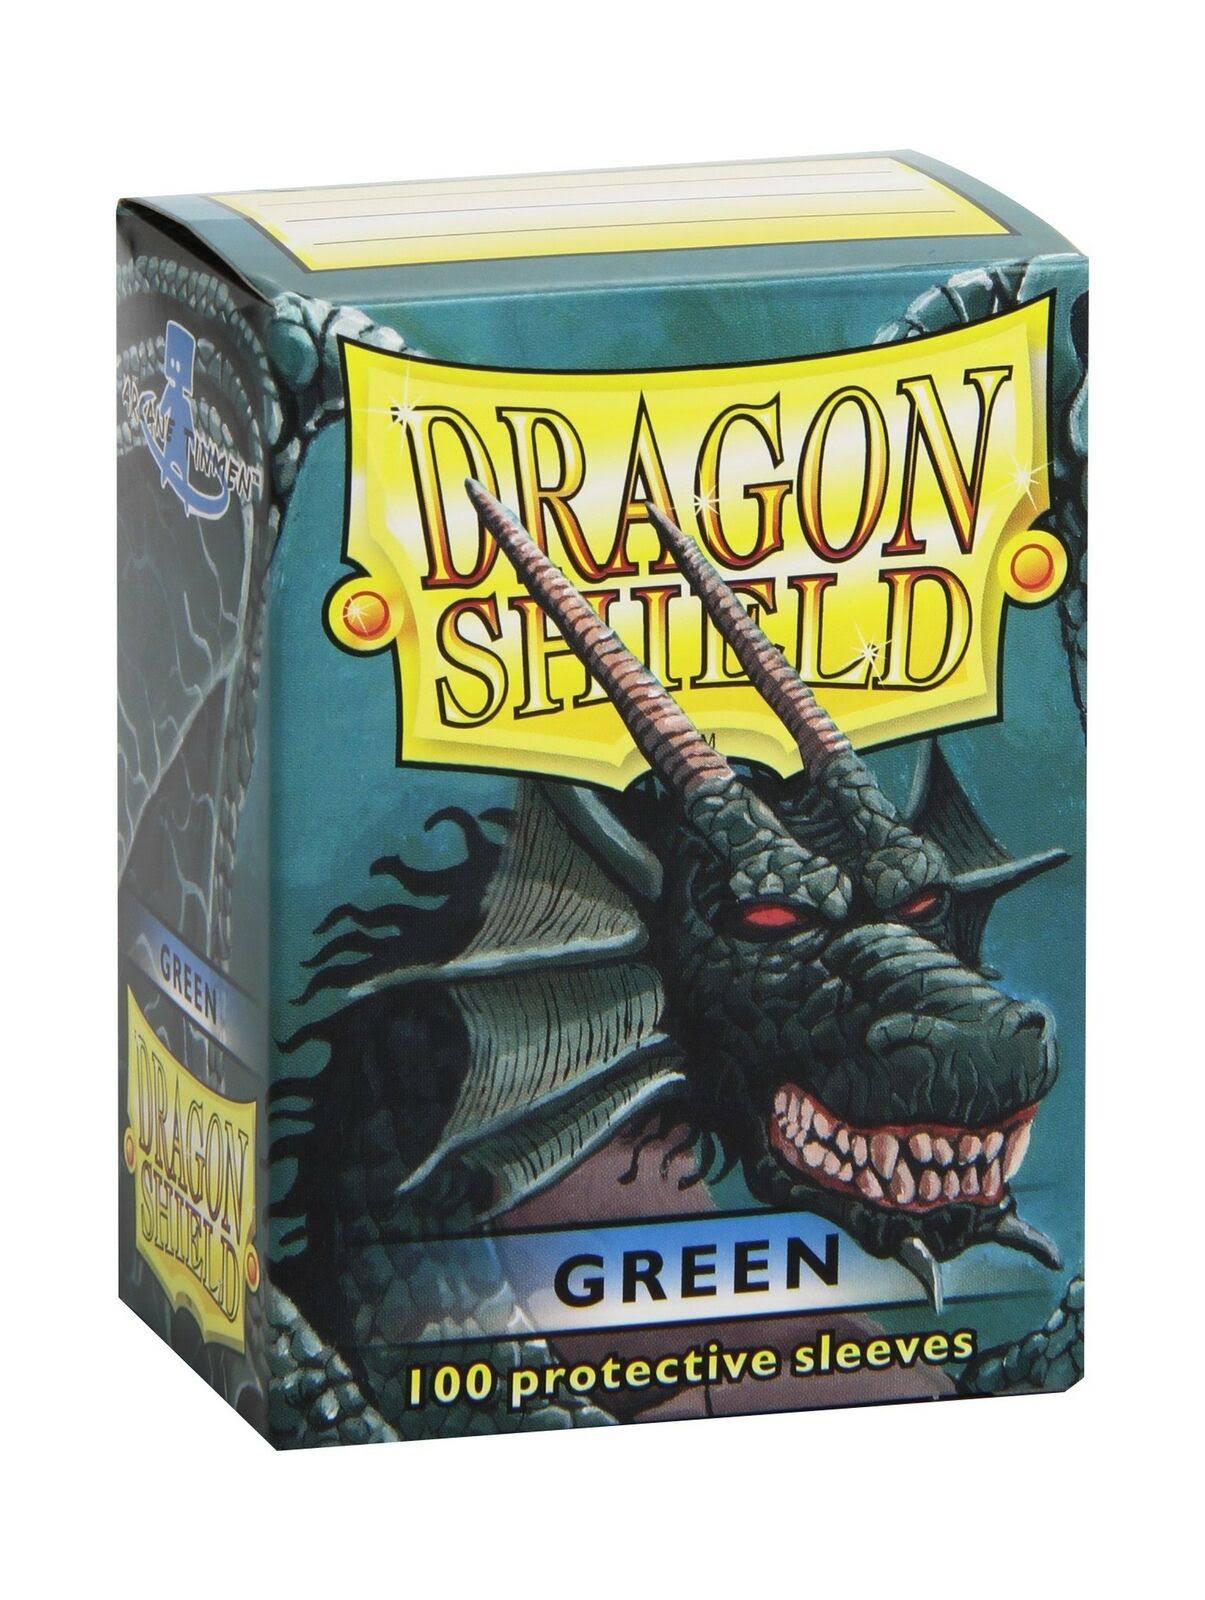 Dragon Shield Protective Sleeves - 100 Protective Sleeves, Green